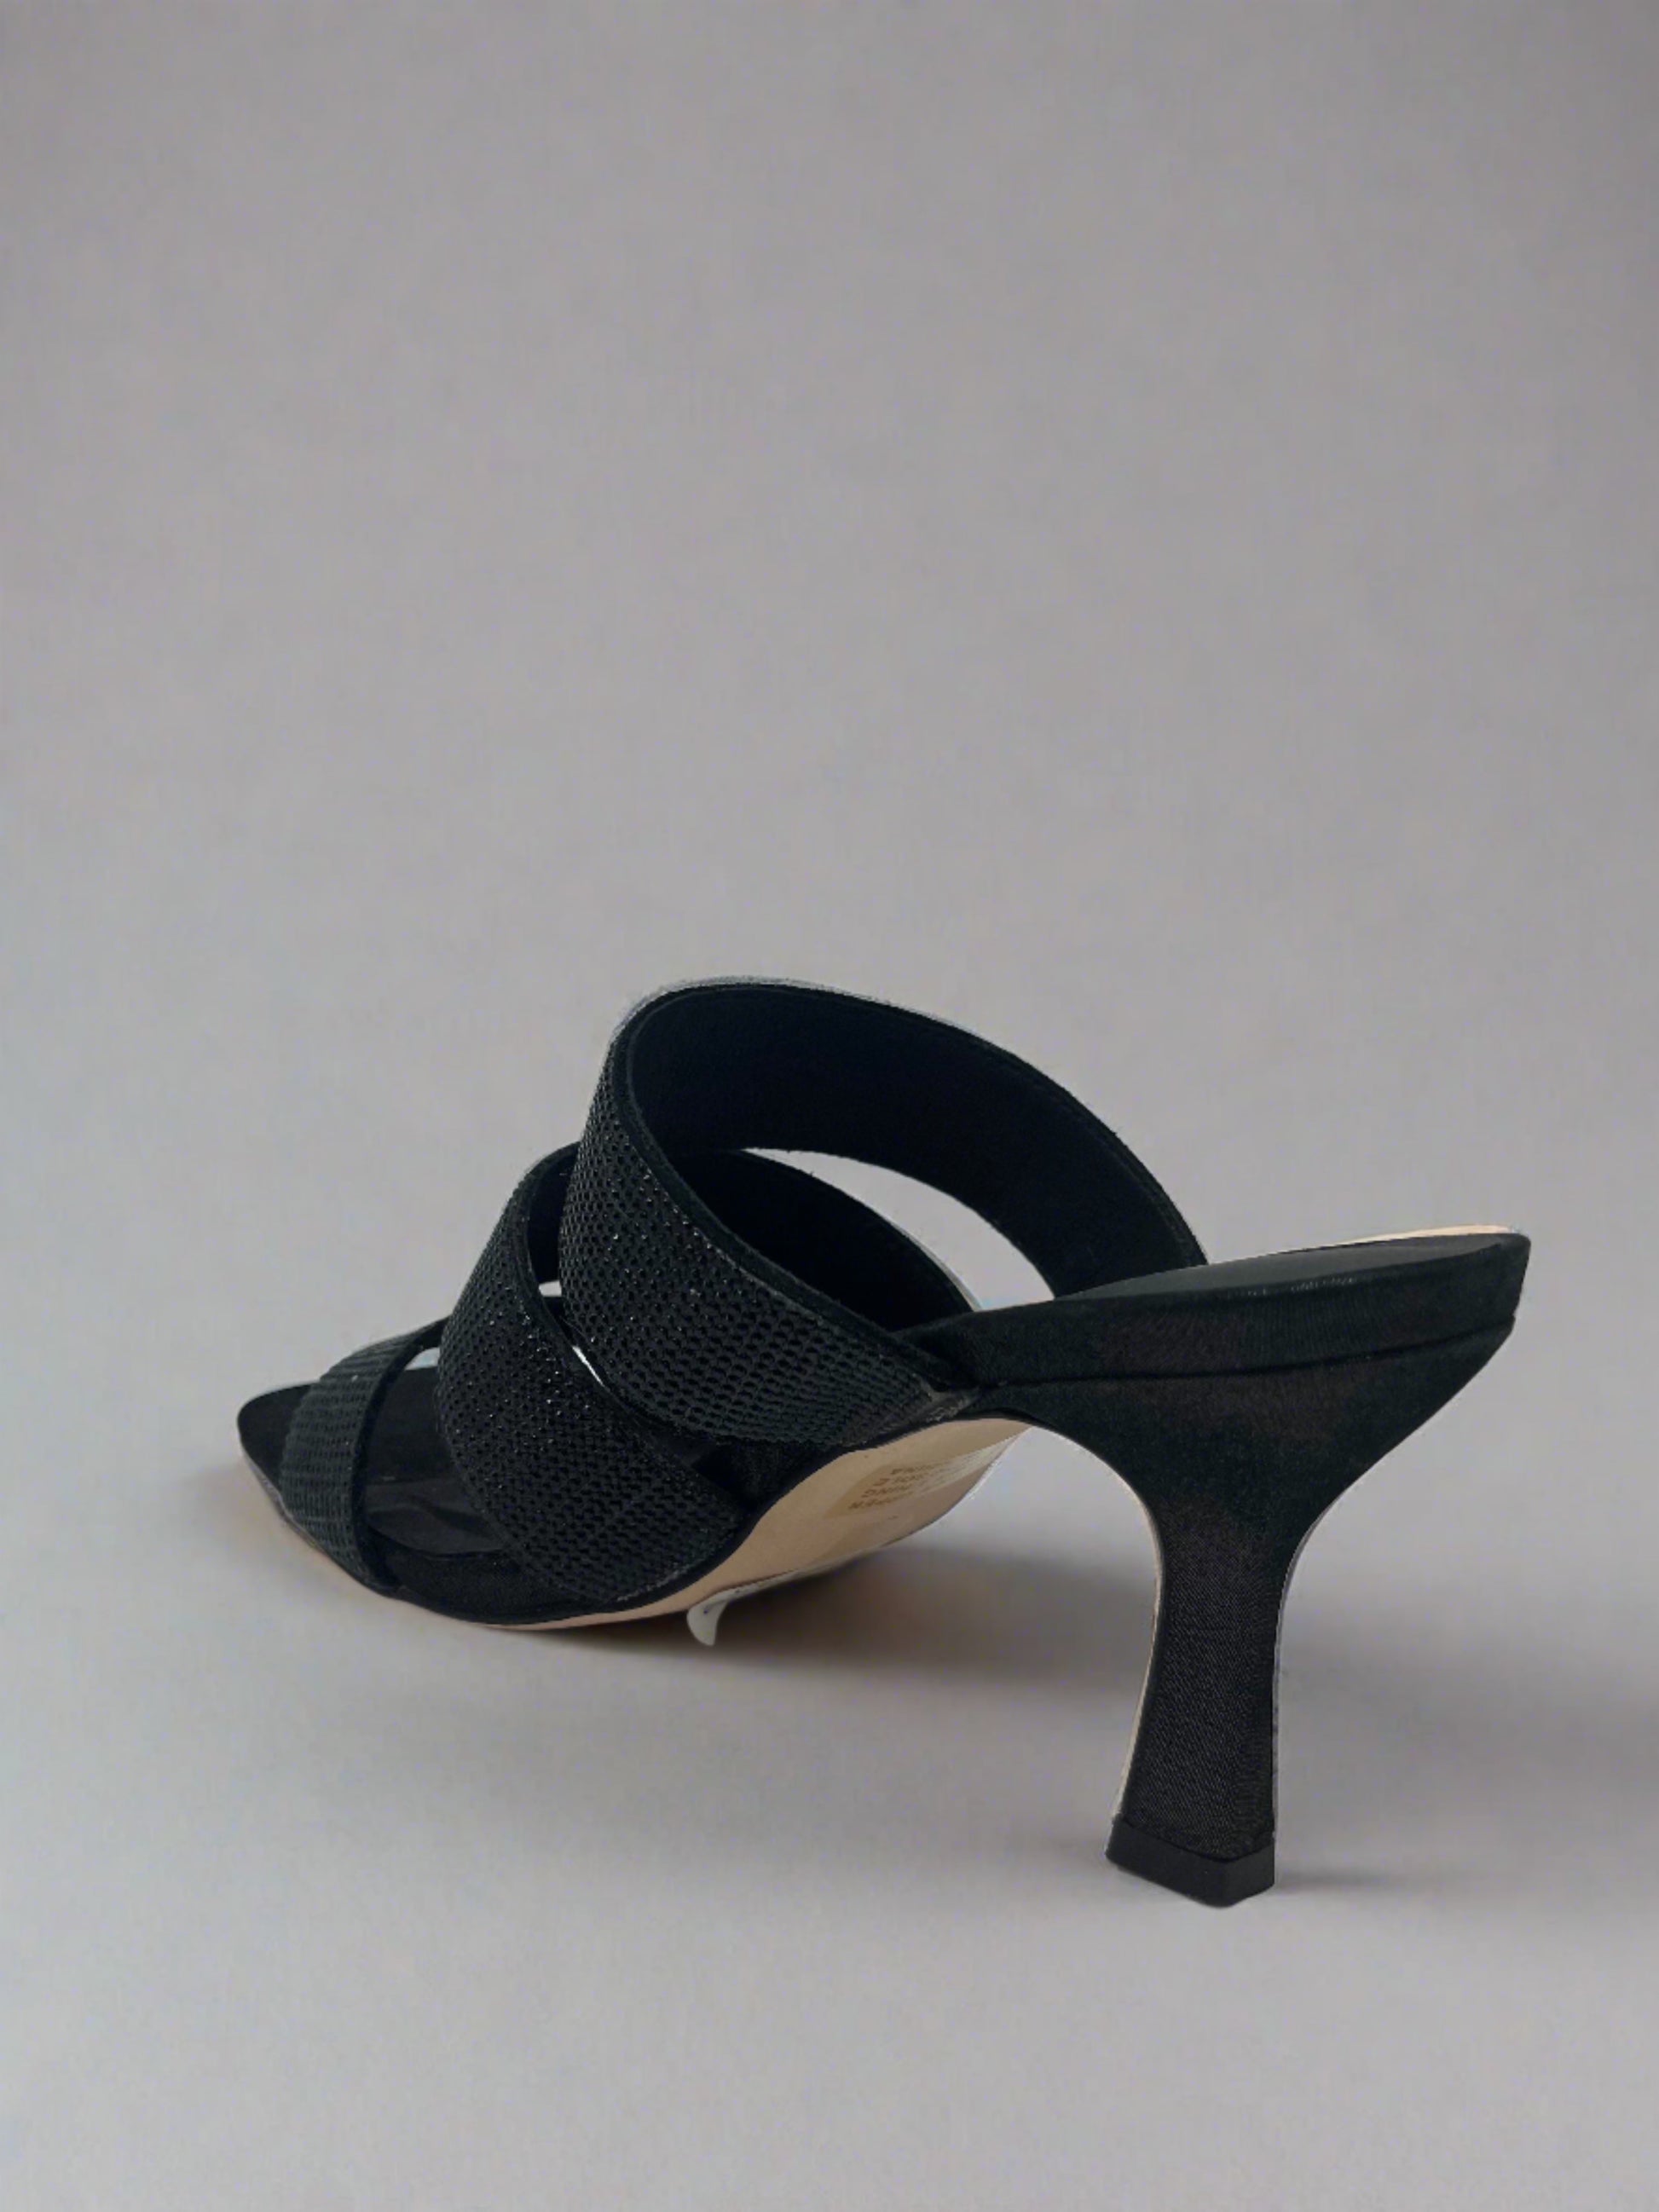 LOMME SPARKLY MULE - TOP END - 36, 37, 38, 39, 40, 41, BF, BLACK, GOLD, mule heel, womens footwear - Stomp Shoes Darwin